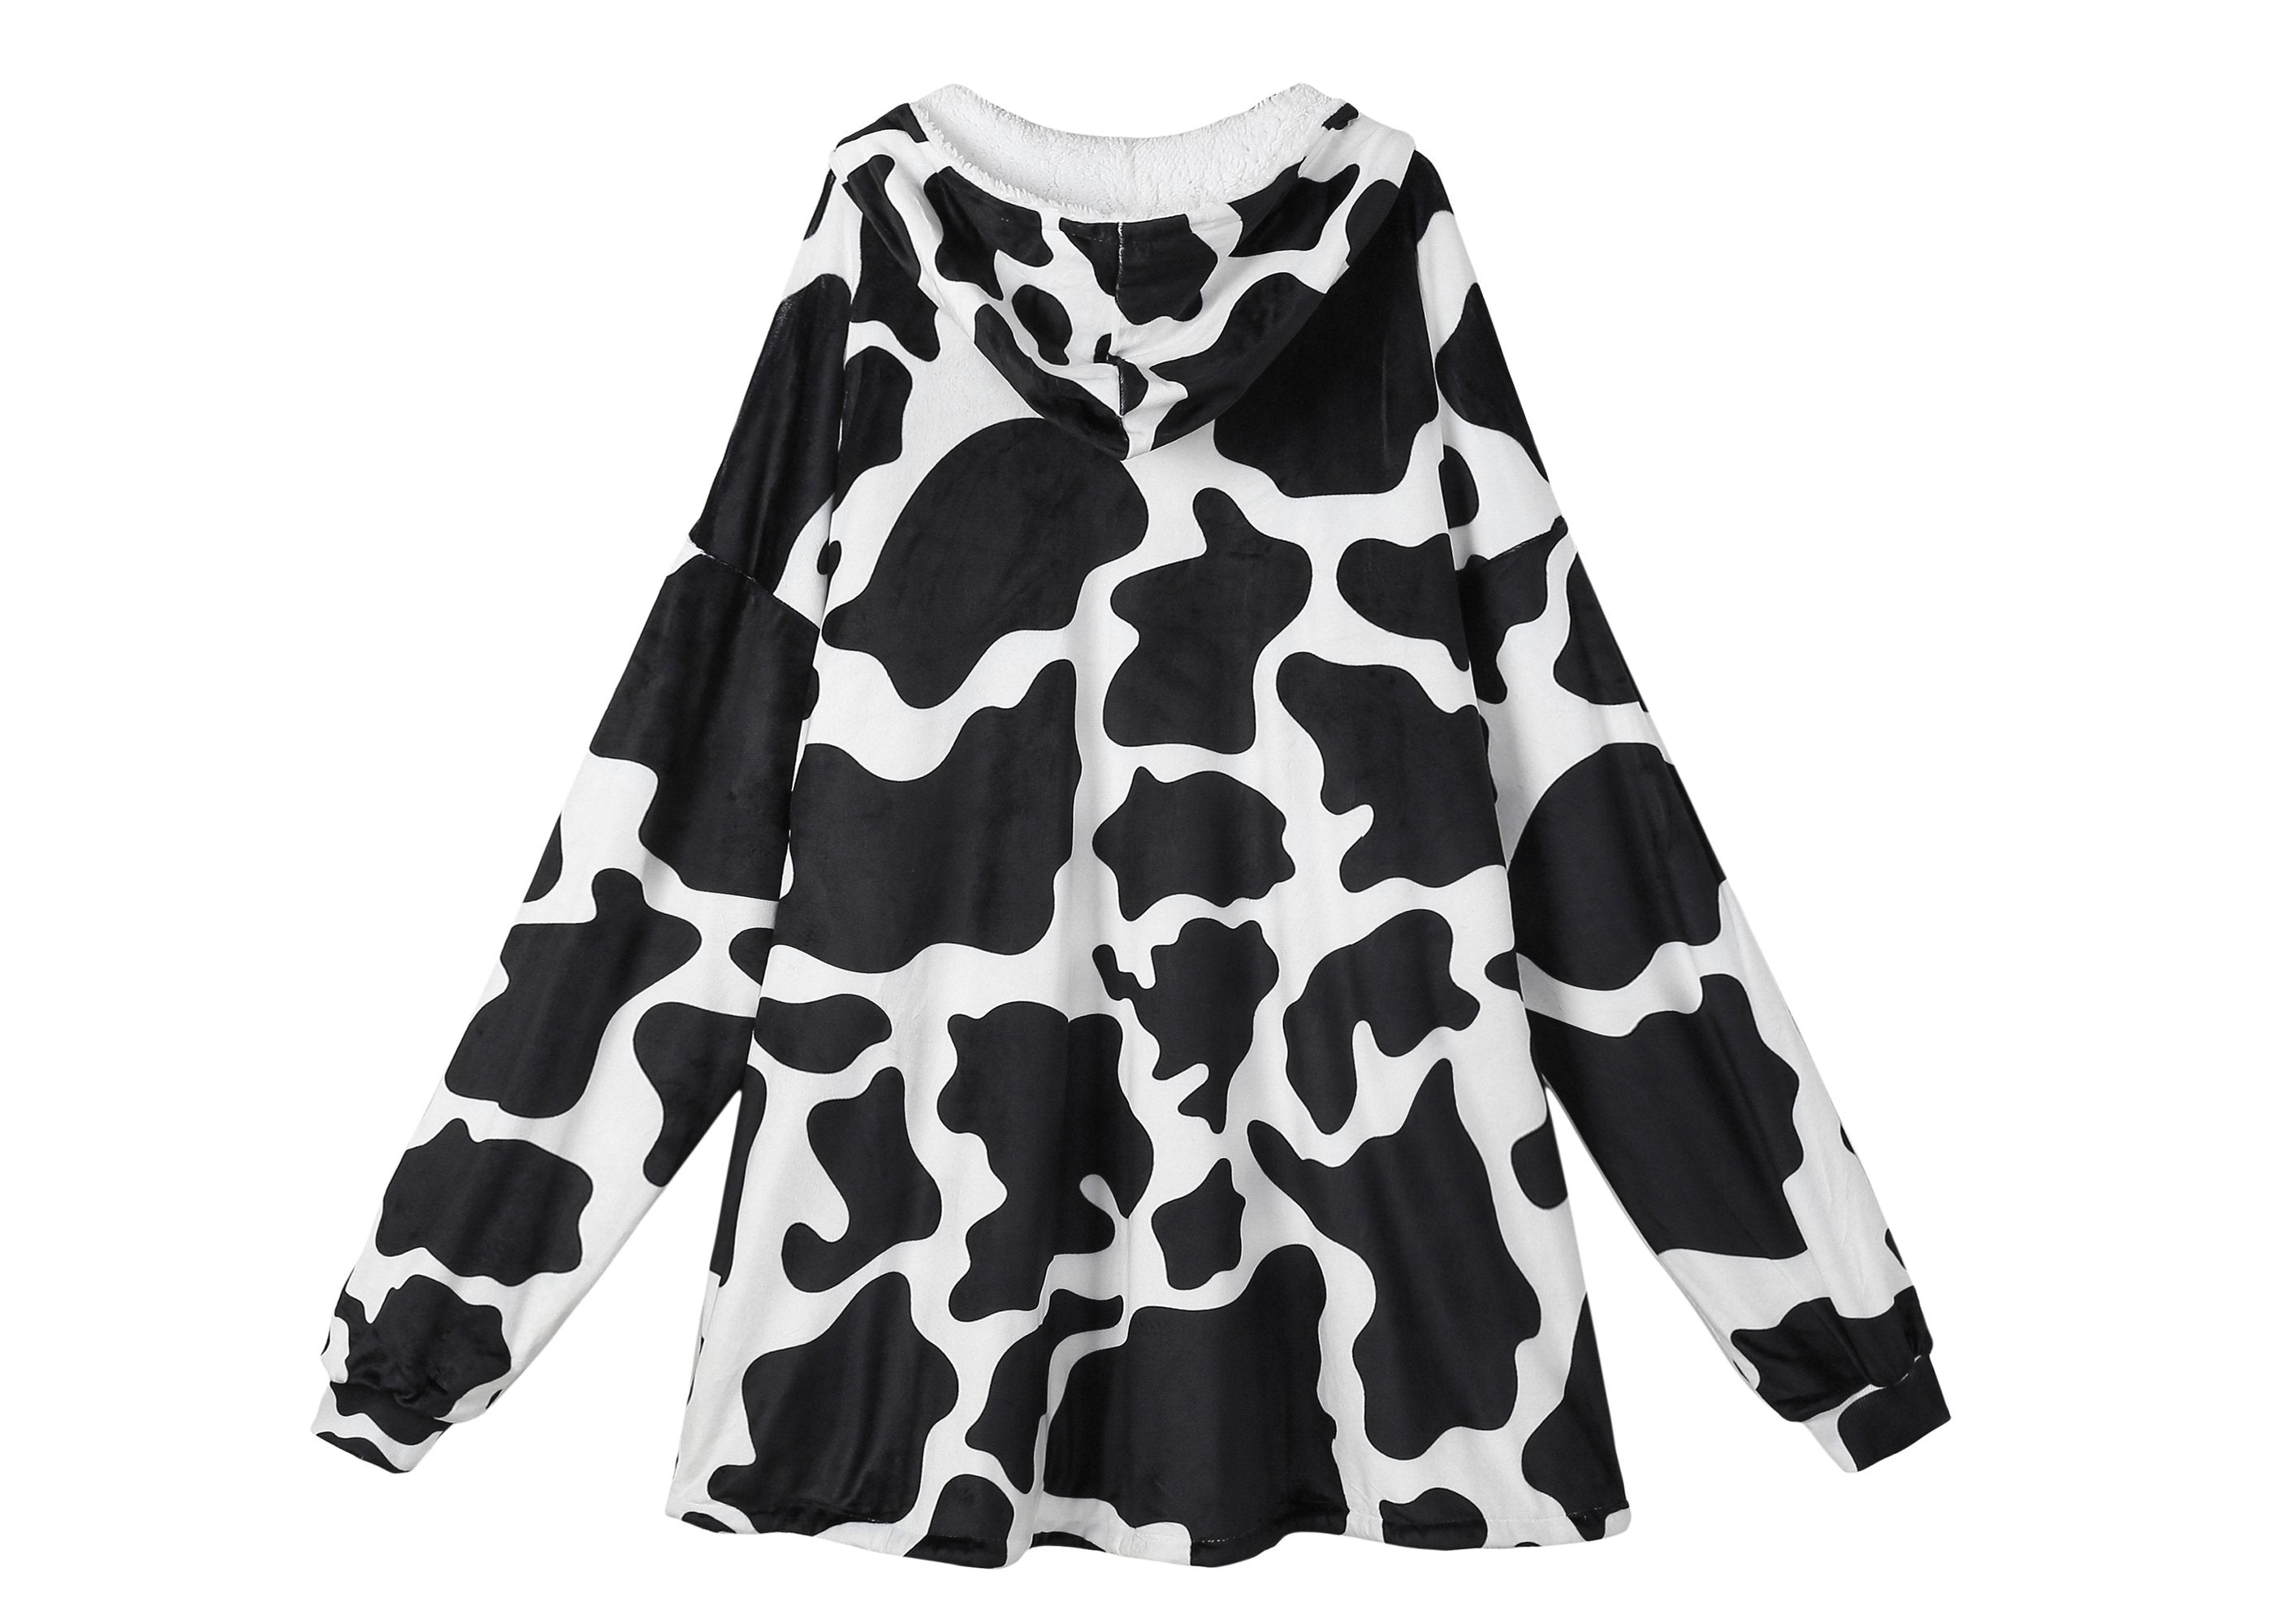 TARRAMARRA® Women and Men Reversible Hoodie Blanket Cow Print